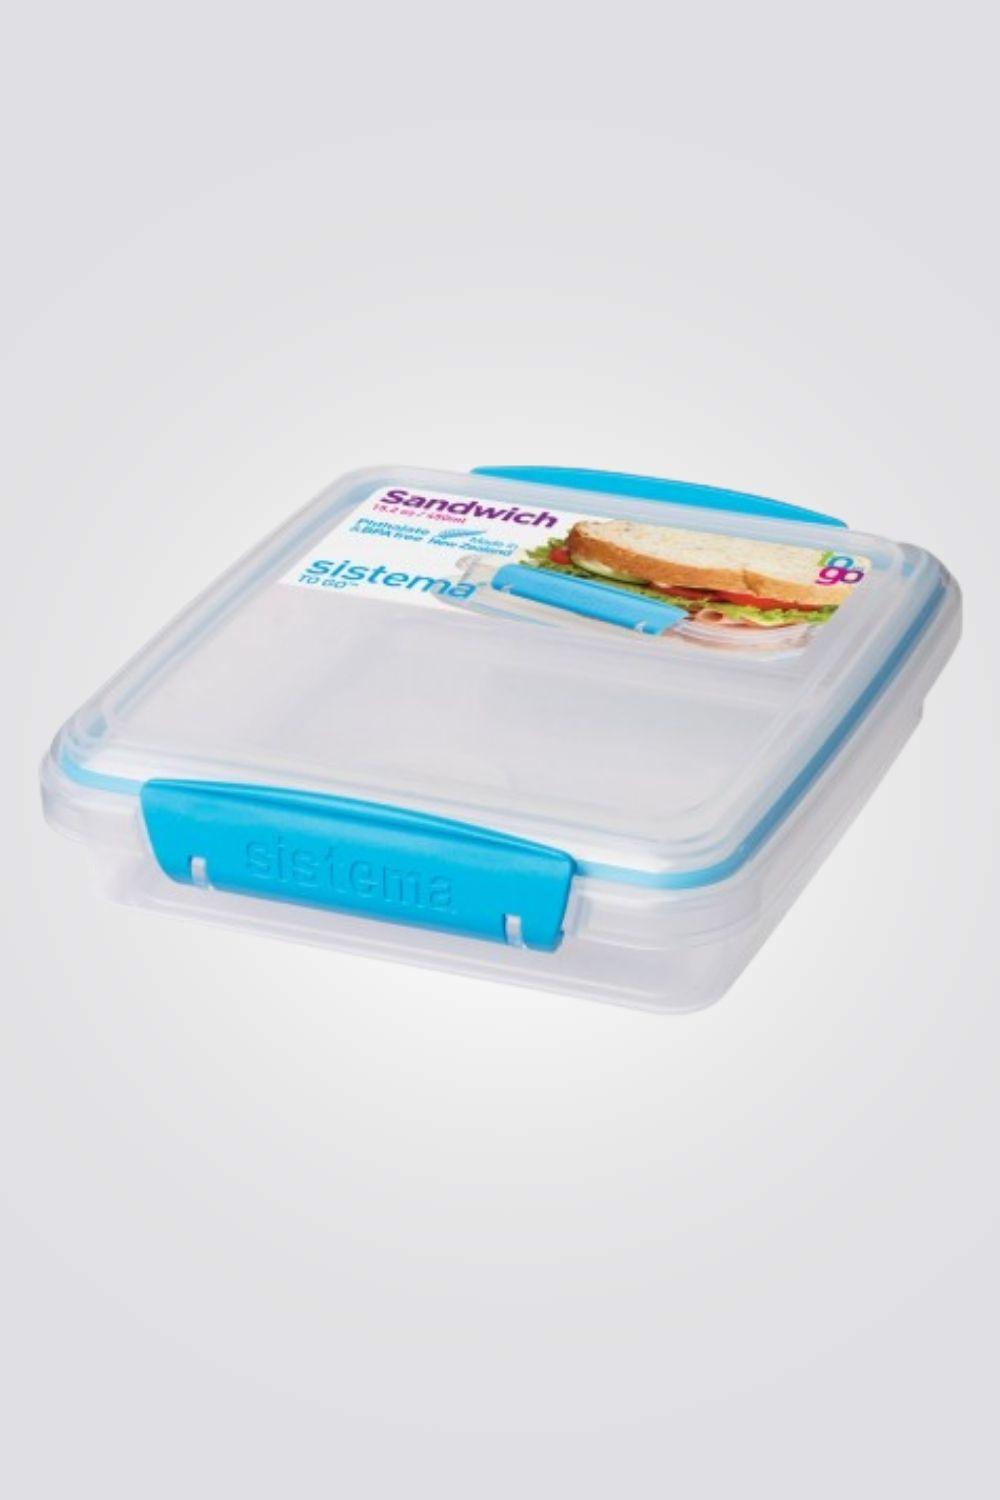 SISTEMA - קופסא לסנדוויץ' 450 מ"ל TO GO תכלת - MASHBIR//365